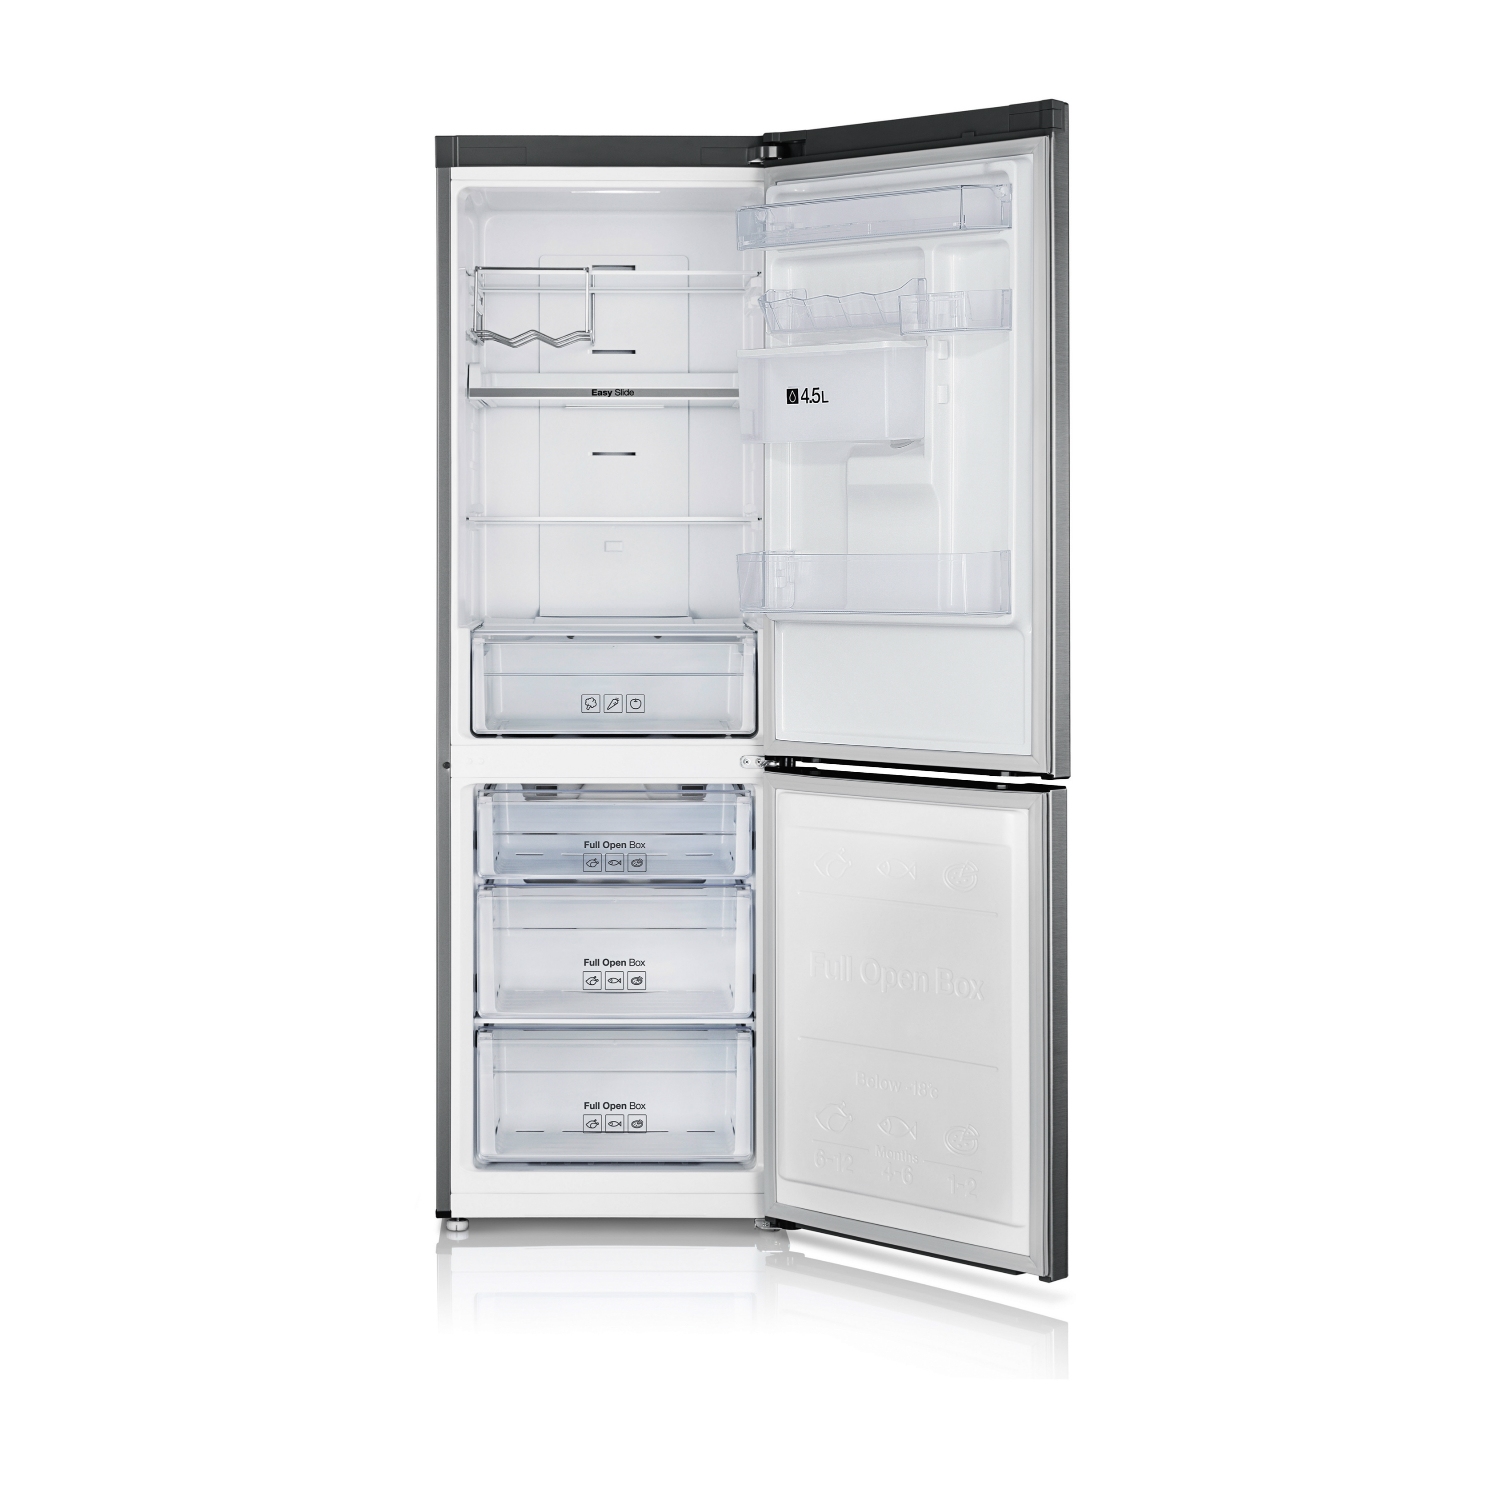 Samsung 60cm Total No Frost Fridge Freezer - Water Dispenser - Silver - 3